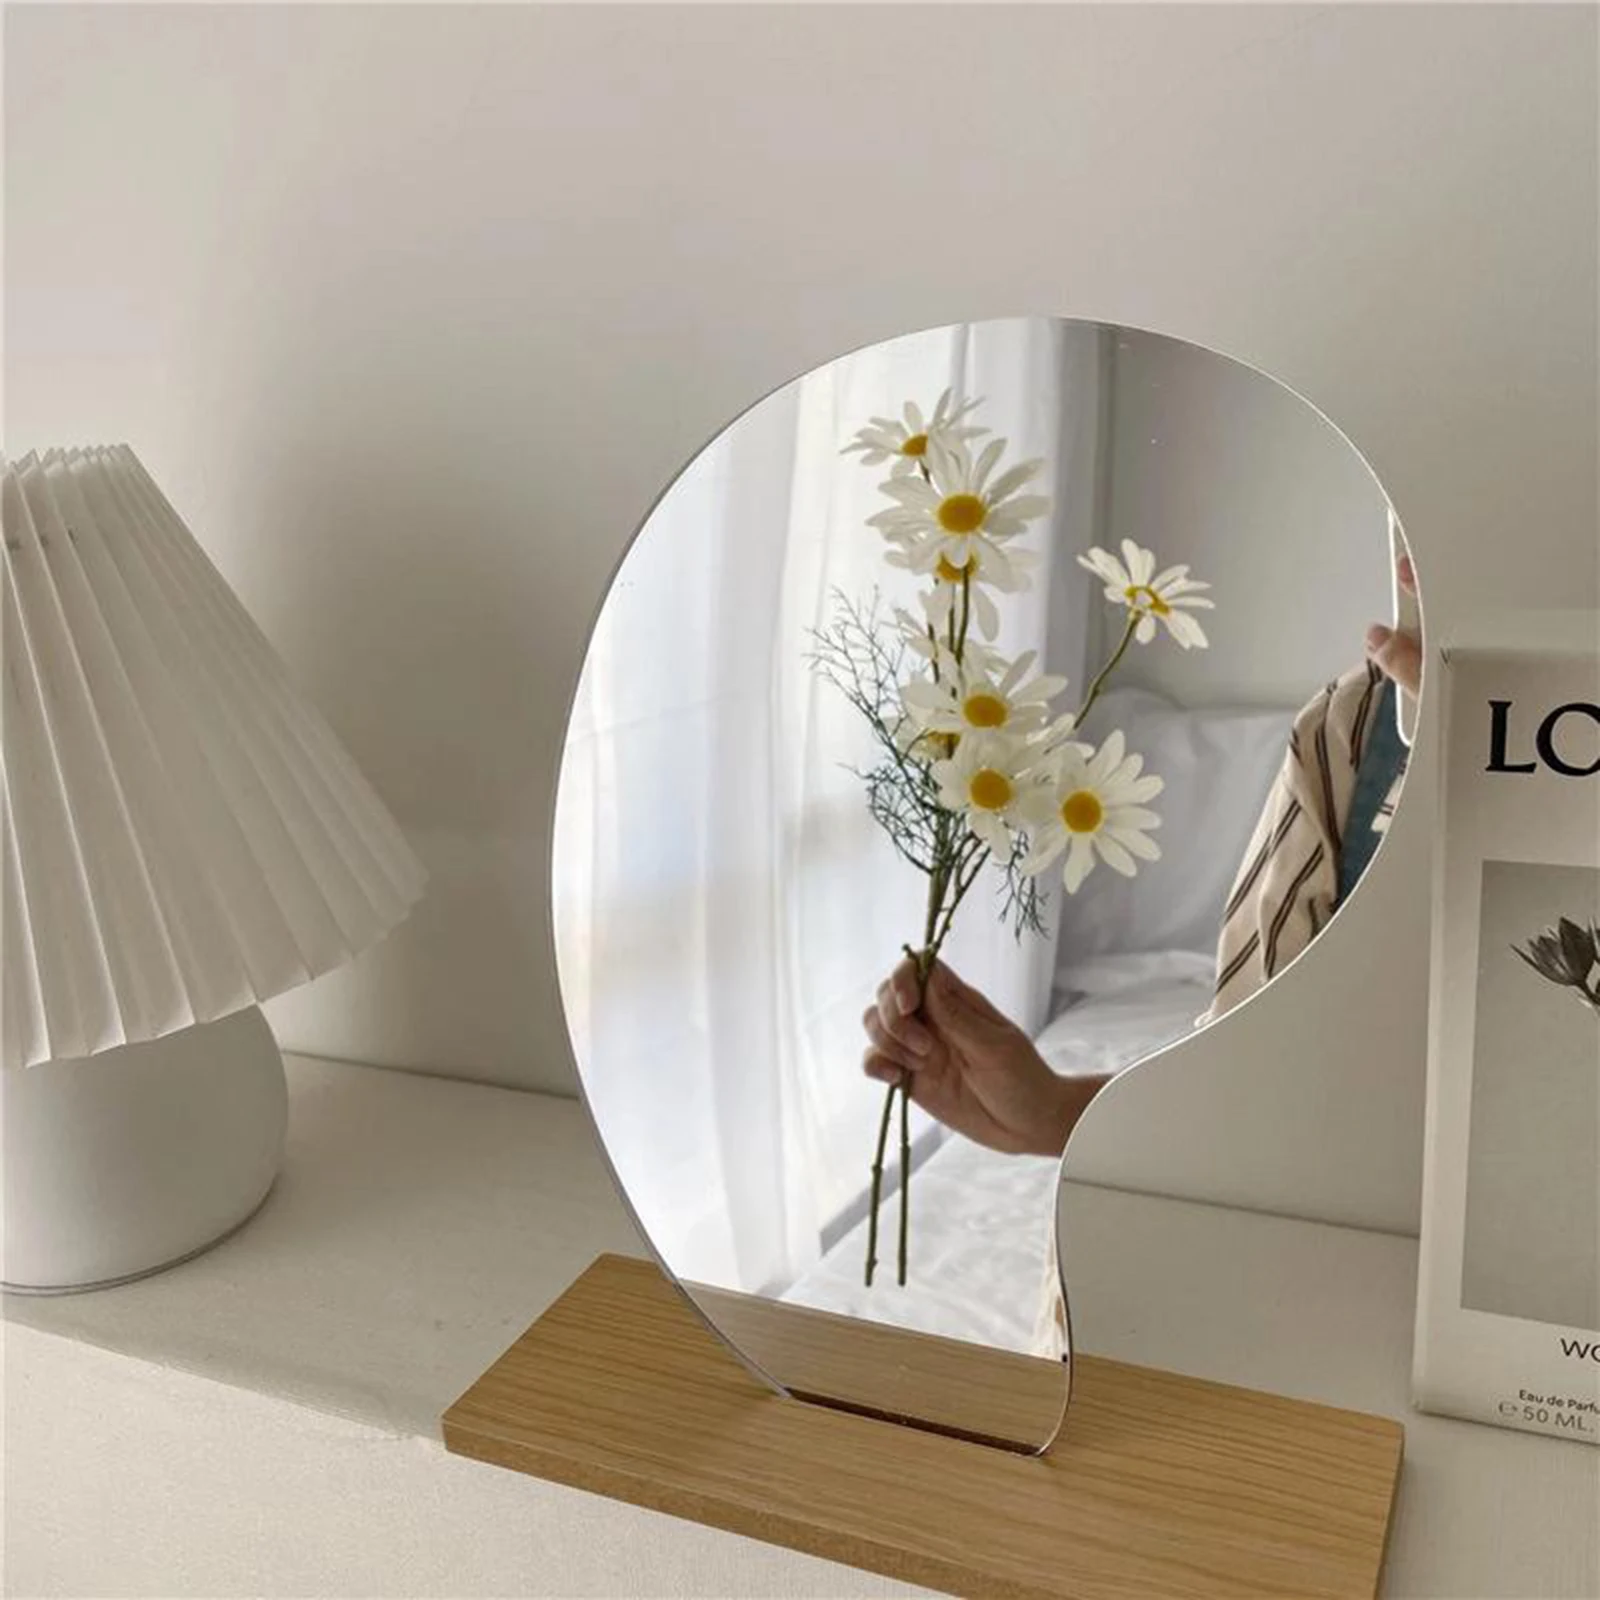 Acrylic Mirrors Irregular Make Up Mirror W/ Wooden Base Decorative Gift